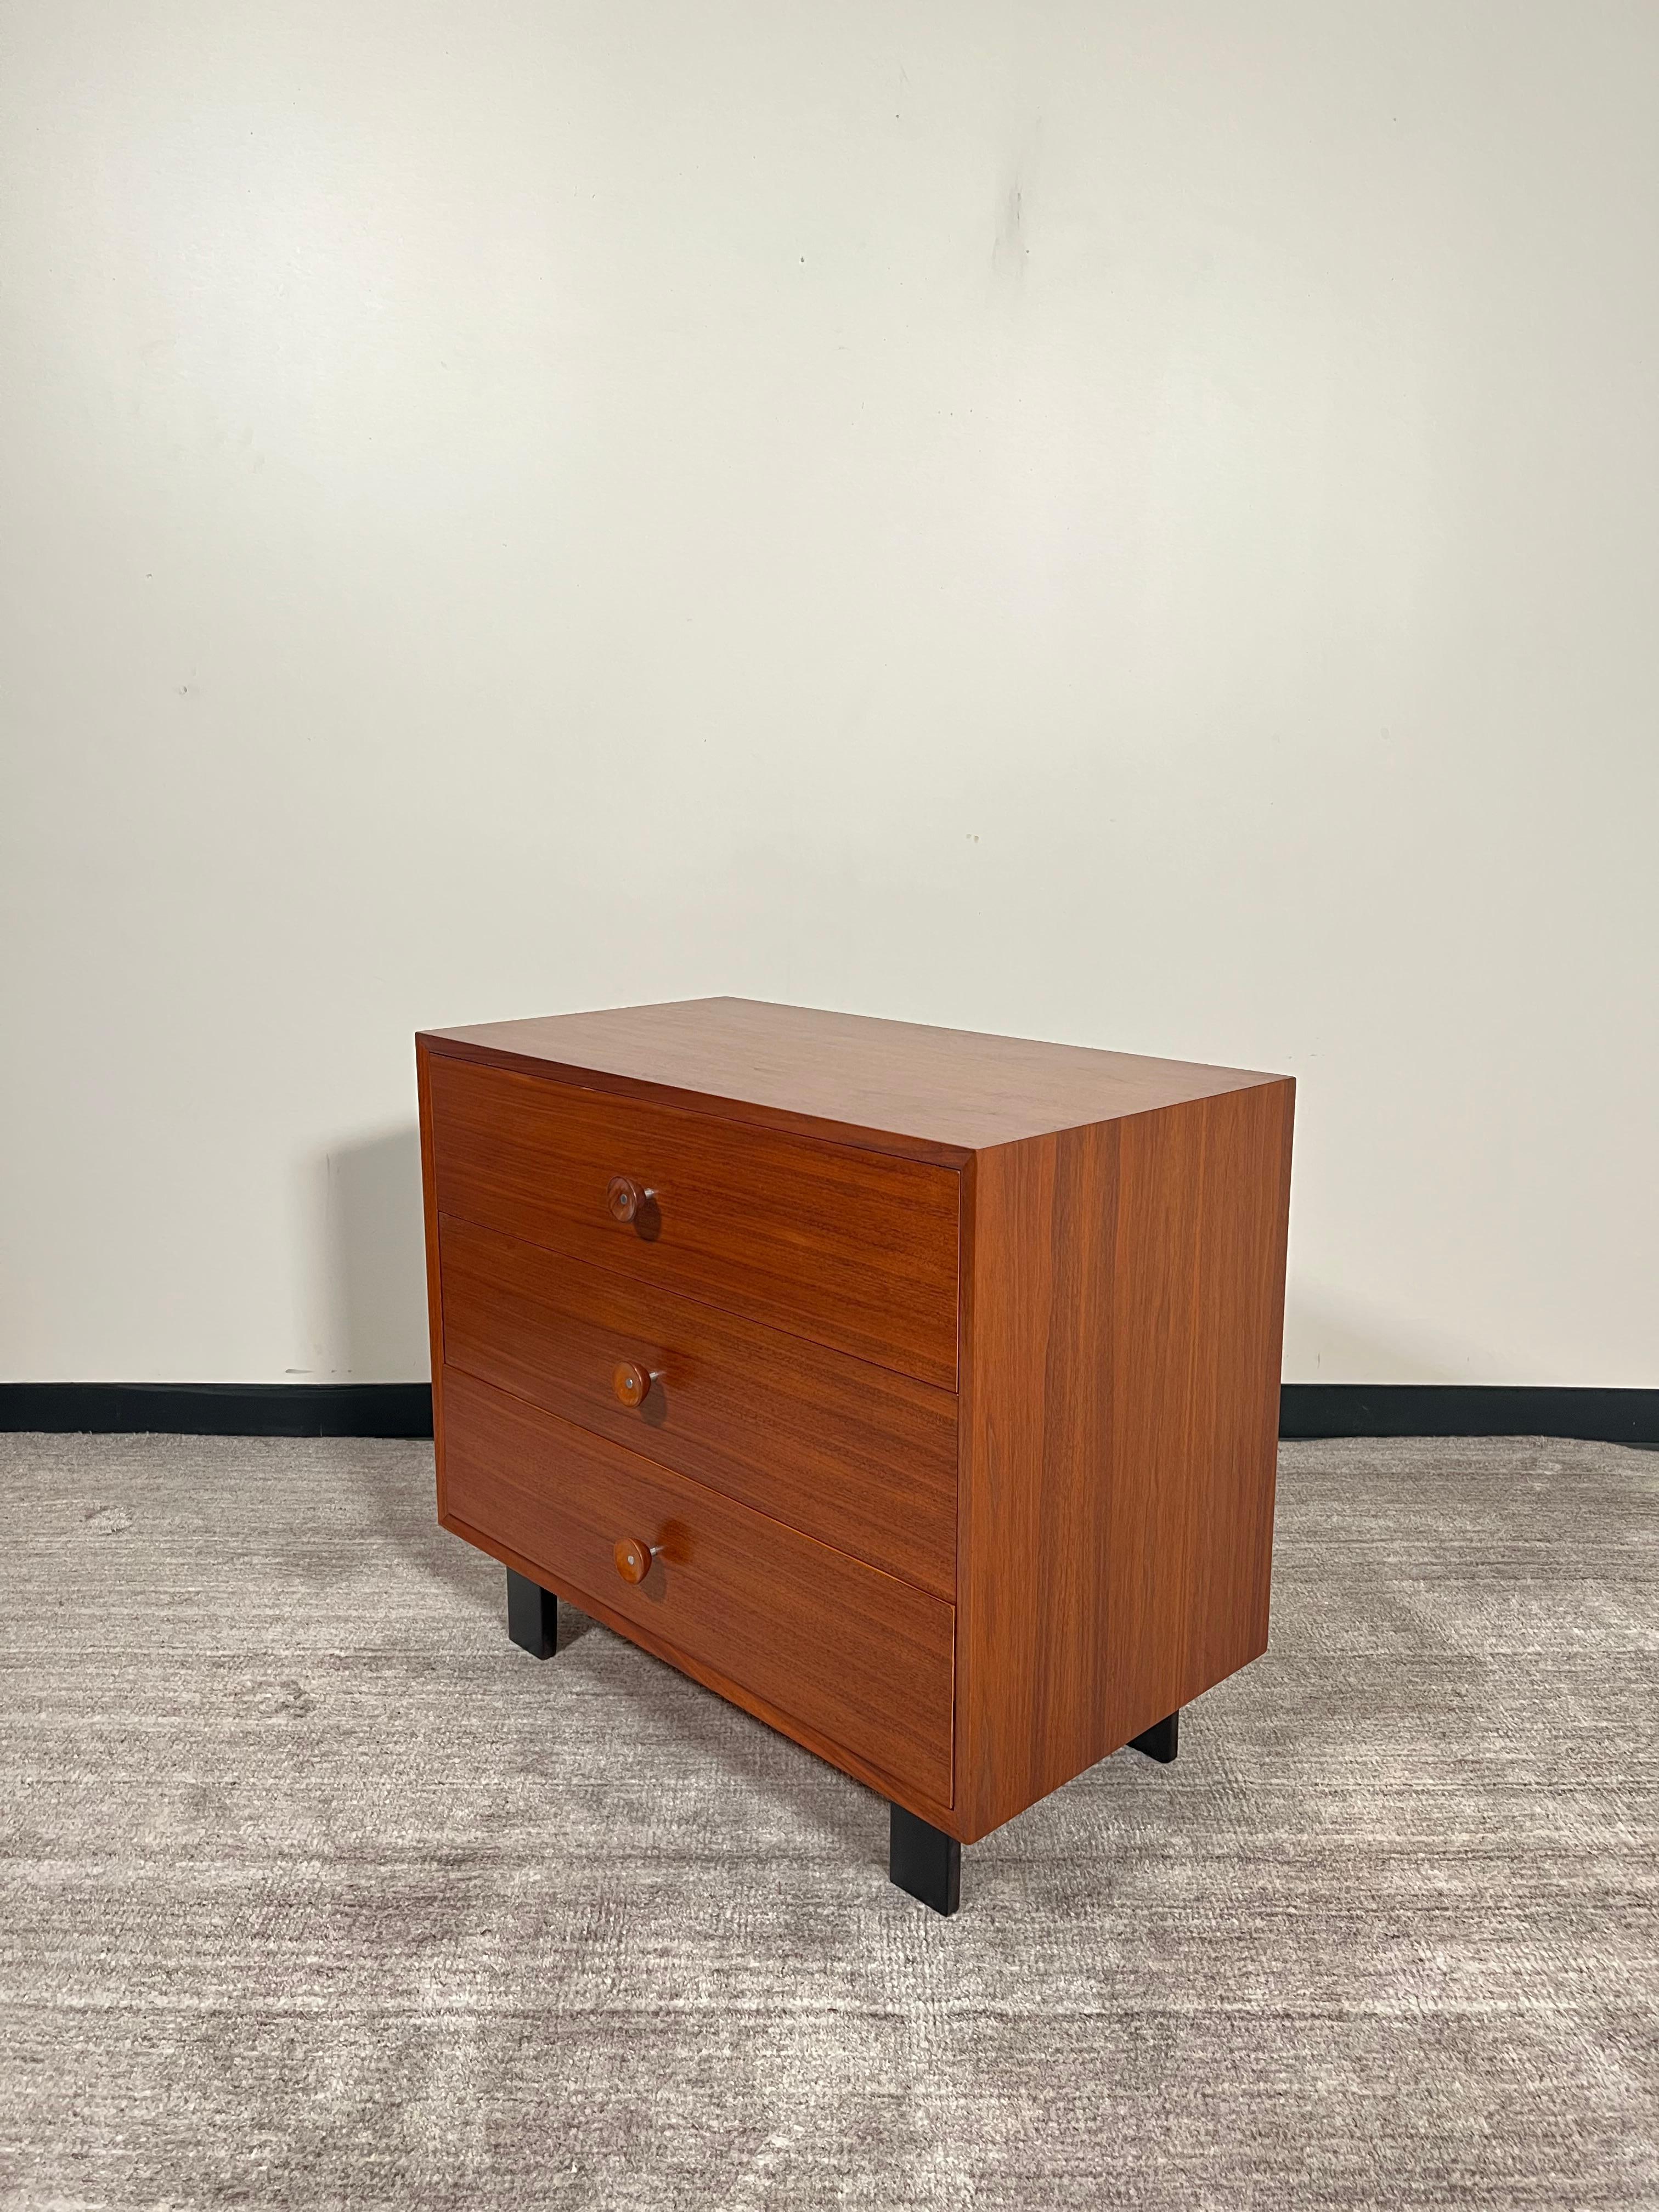 Wood George Nelson for Herman Miller 'Basic Cabinet Series' Dresser, c. 1955, Signed